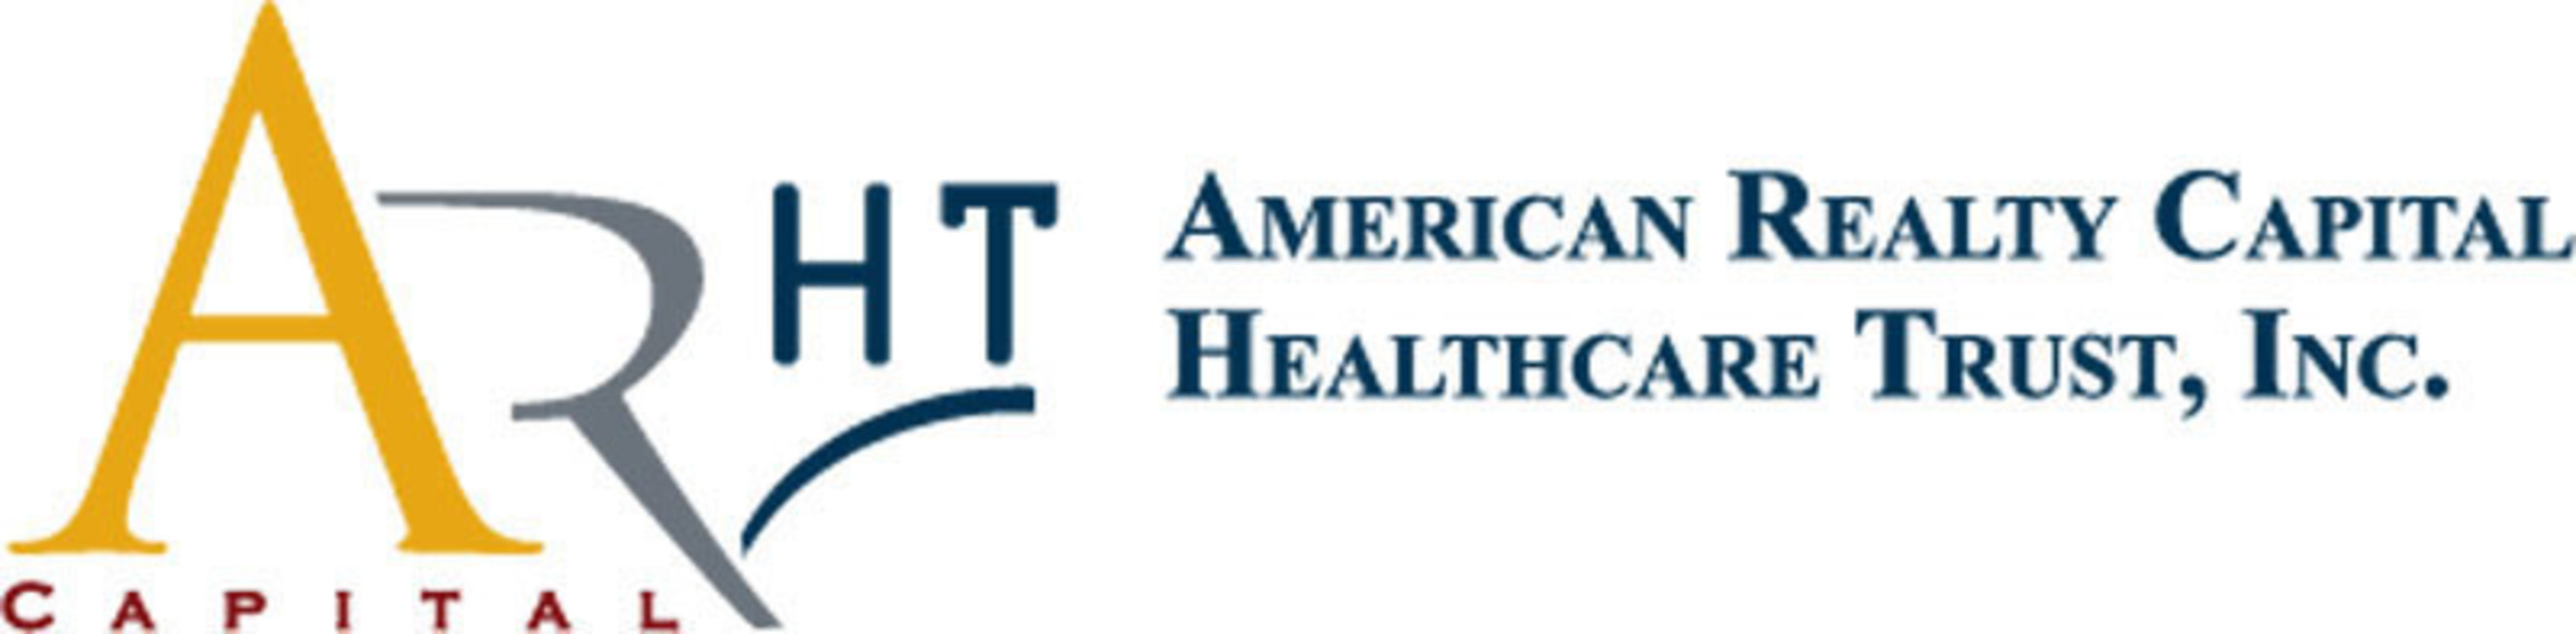 American Realty Capital Healthcare Trust, Inc. (PRNewsFoto/American Realty Capital Healthcare Trust, Inc.) (PRNewsFoto/)